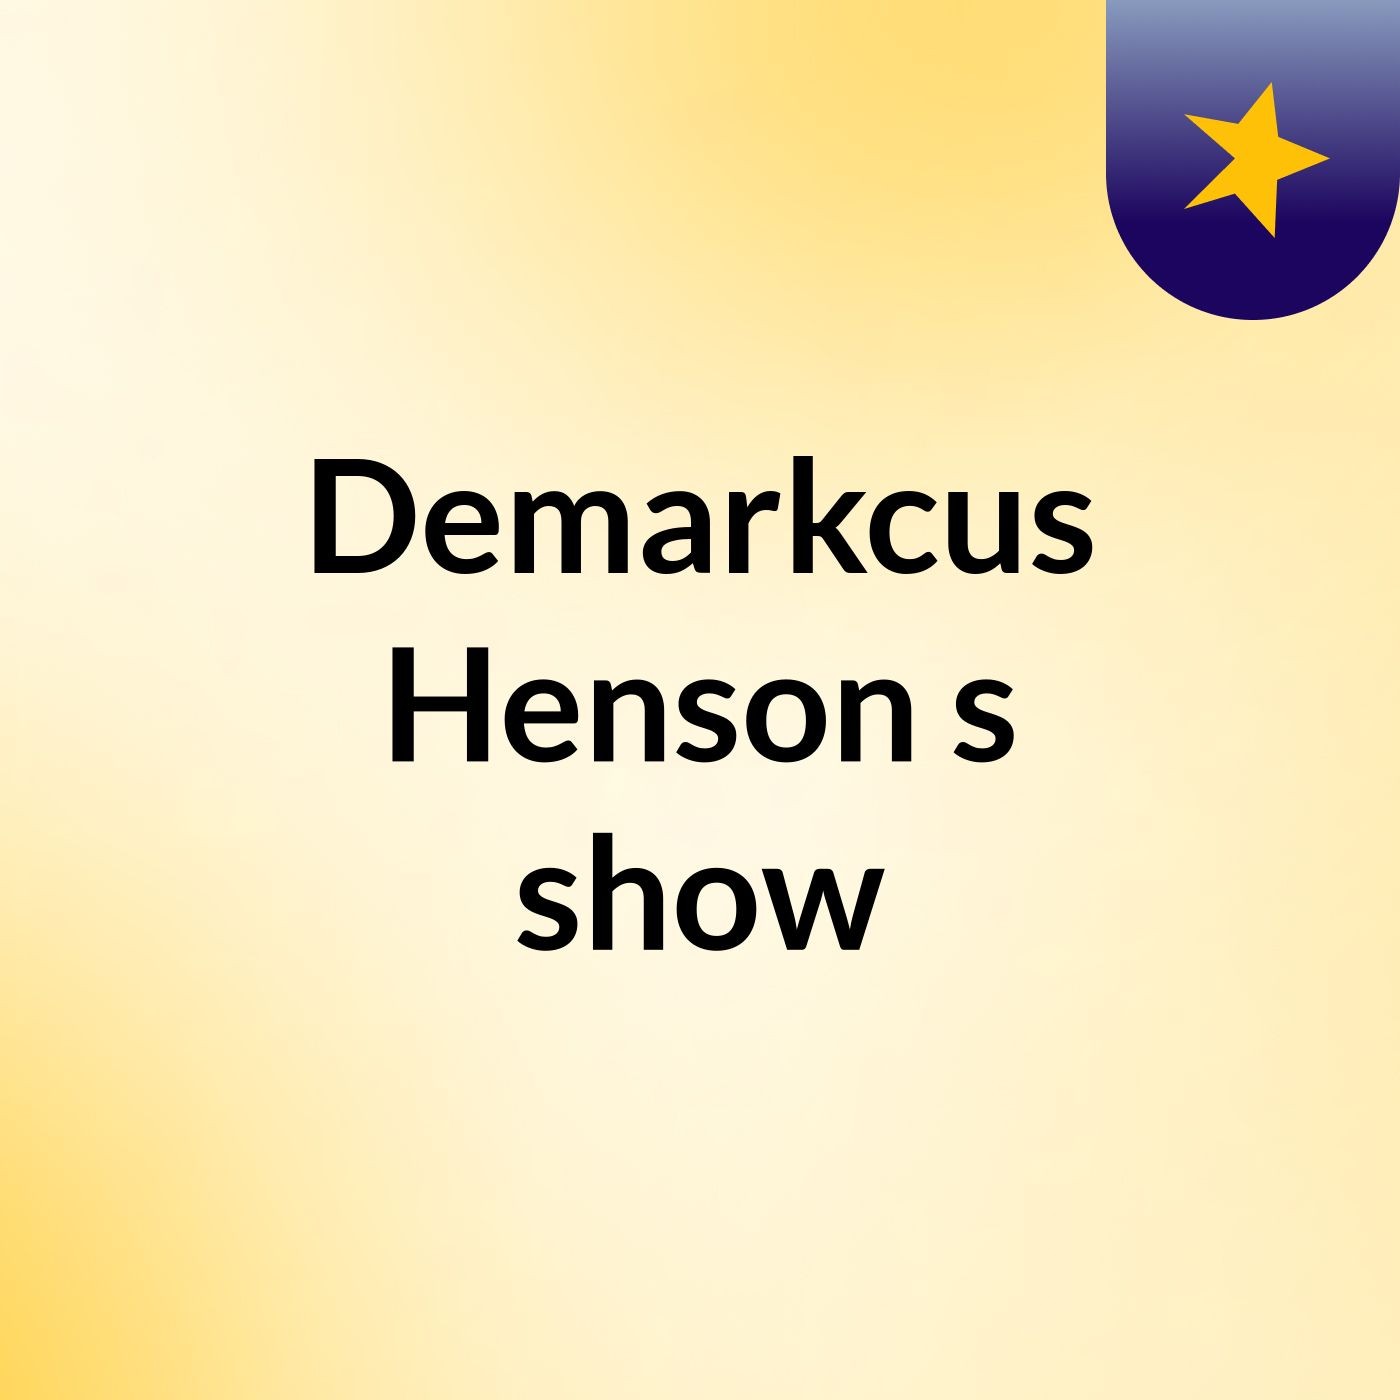 Episode 5 - Demarkcus Henson's show